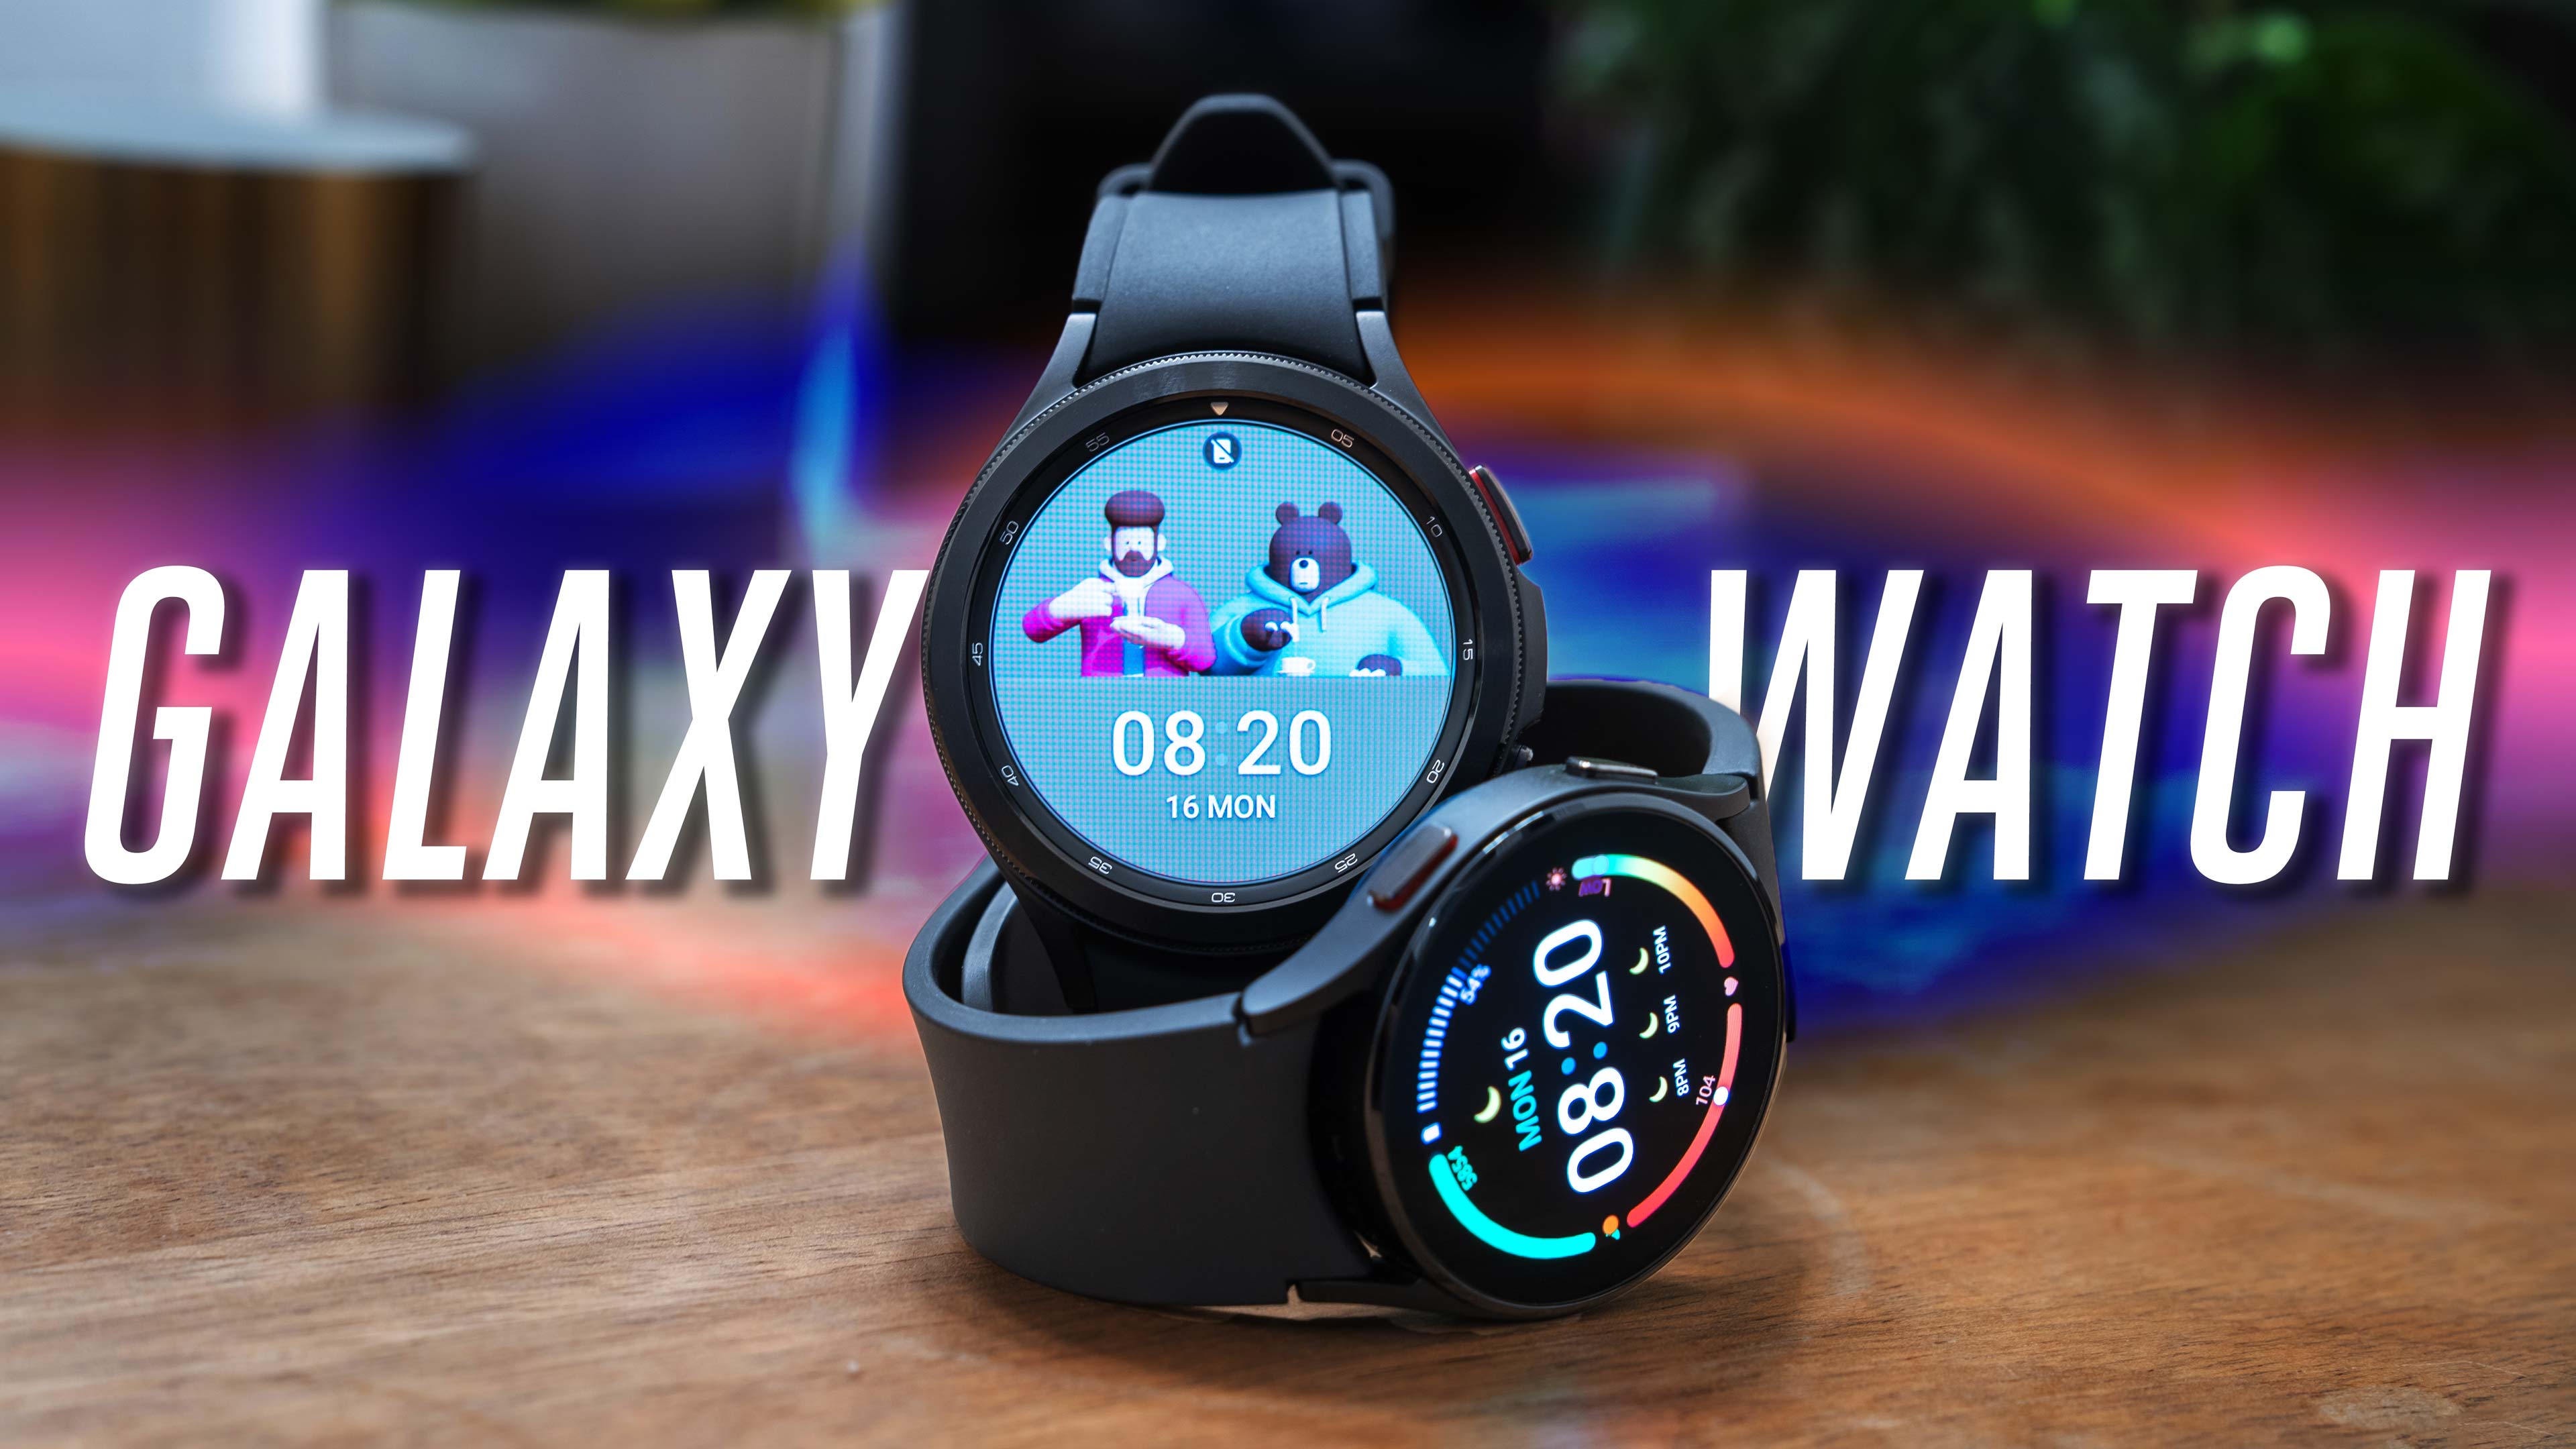 Samsung Galaxy Watch 4 Review